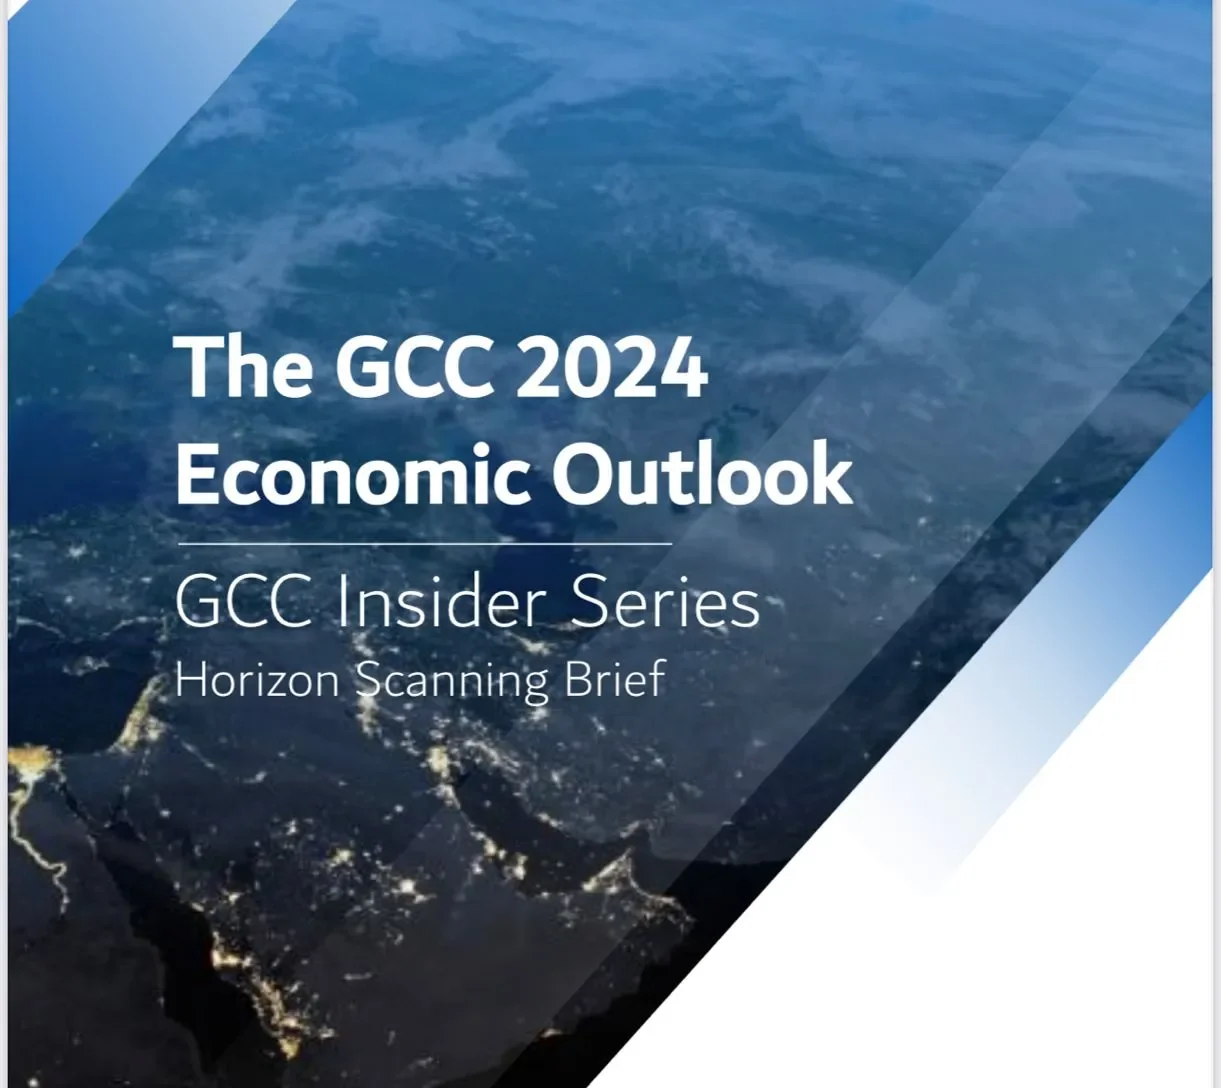 The GCC 2024 Economic Outlook International Advisory Group